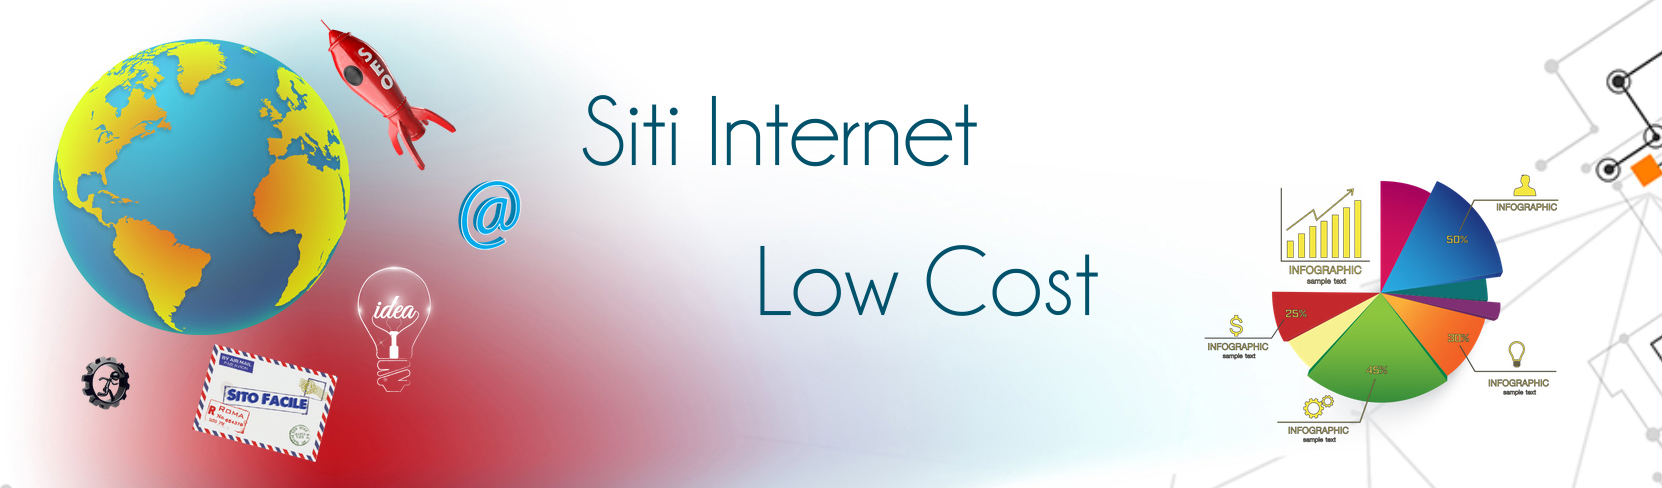 Siti internet low cost